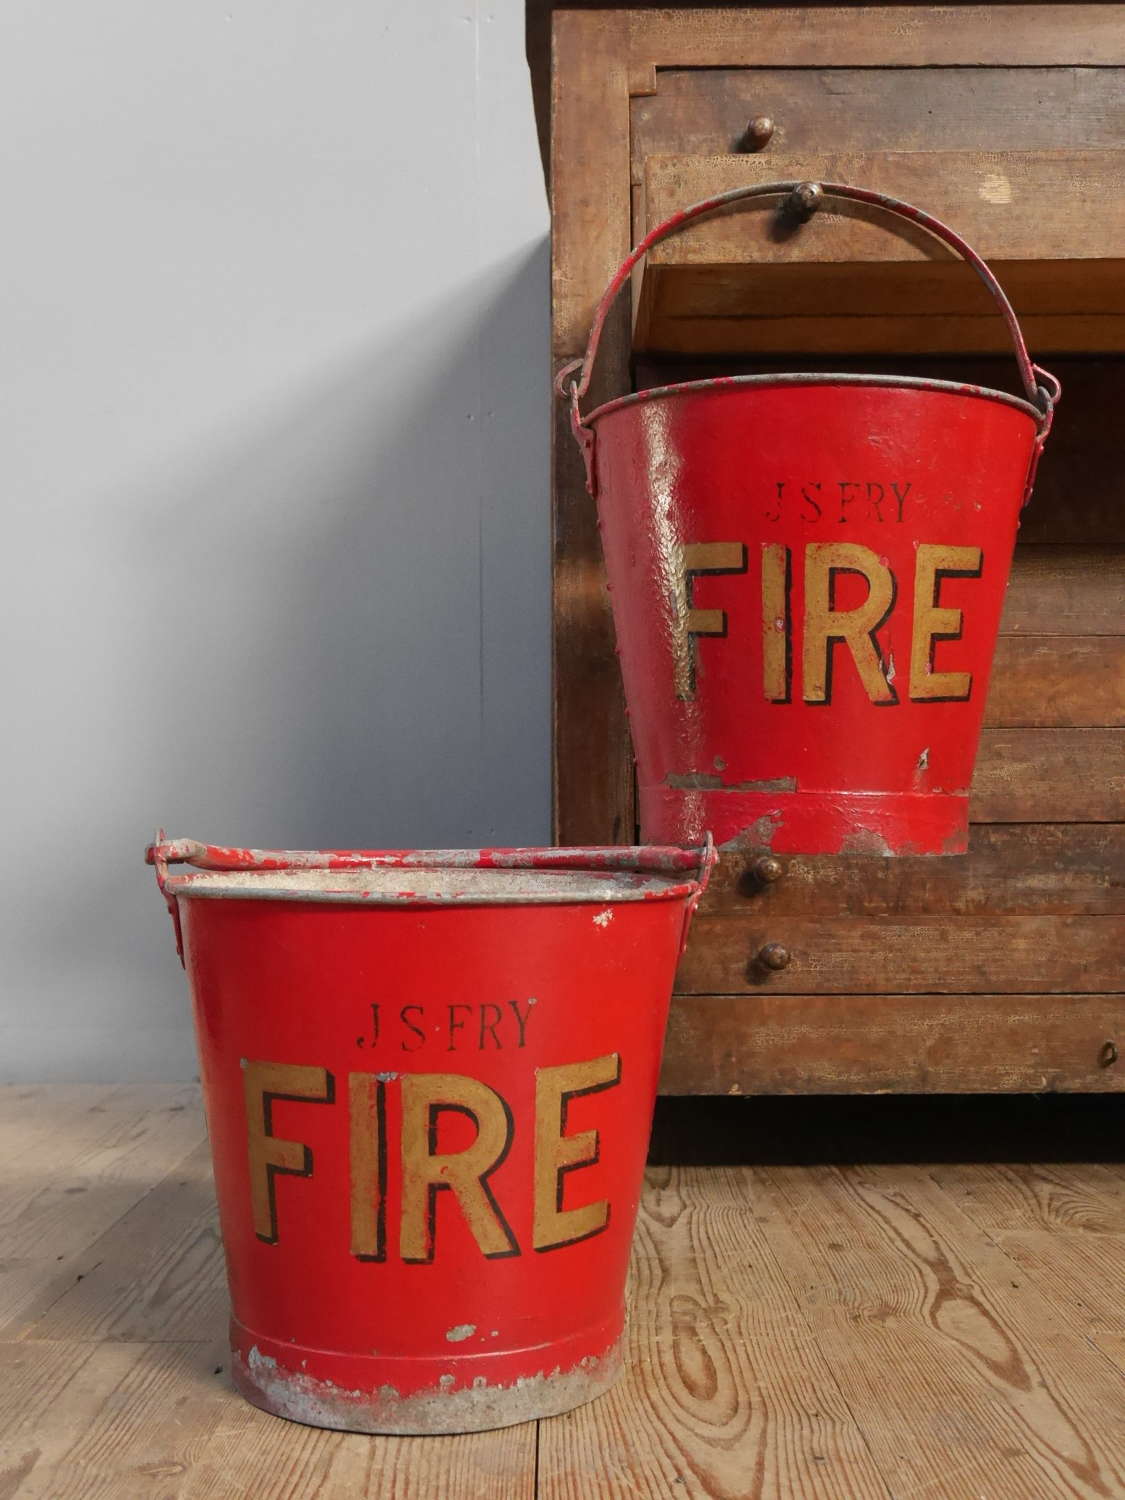 Pair of J S Fry's Fire Buckets